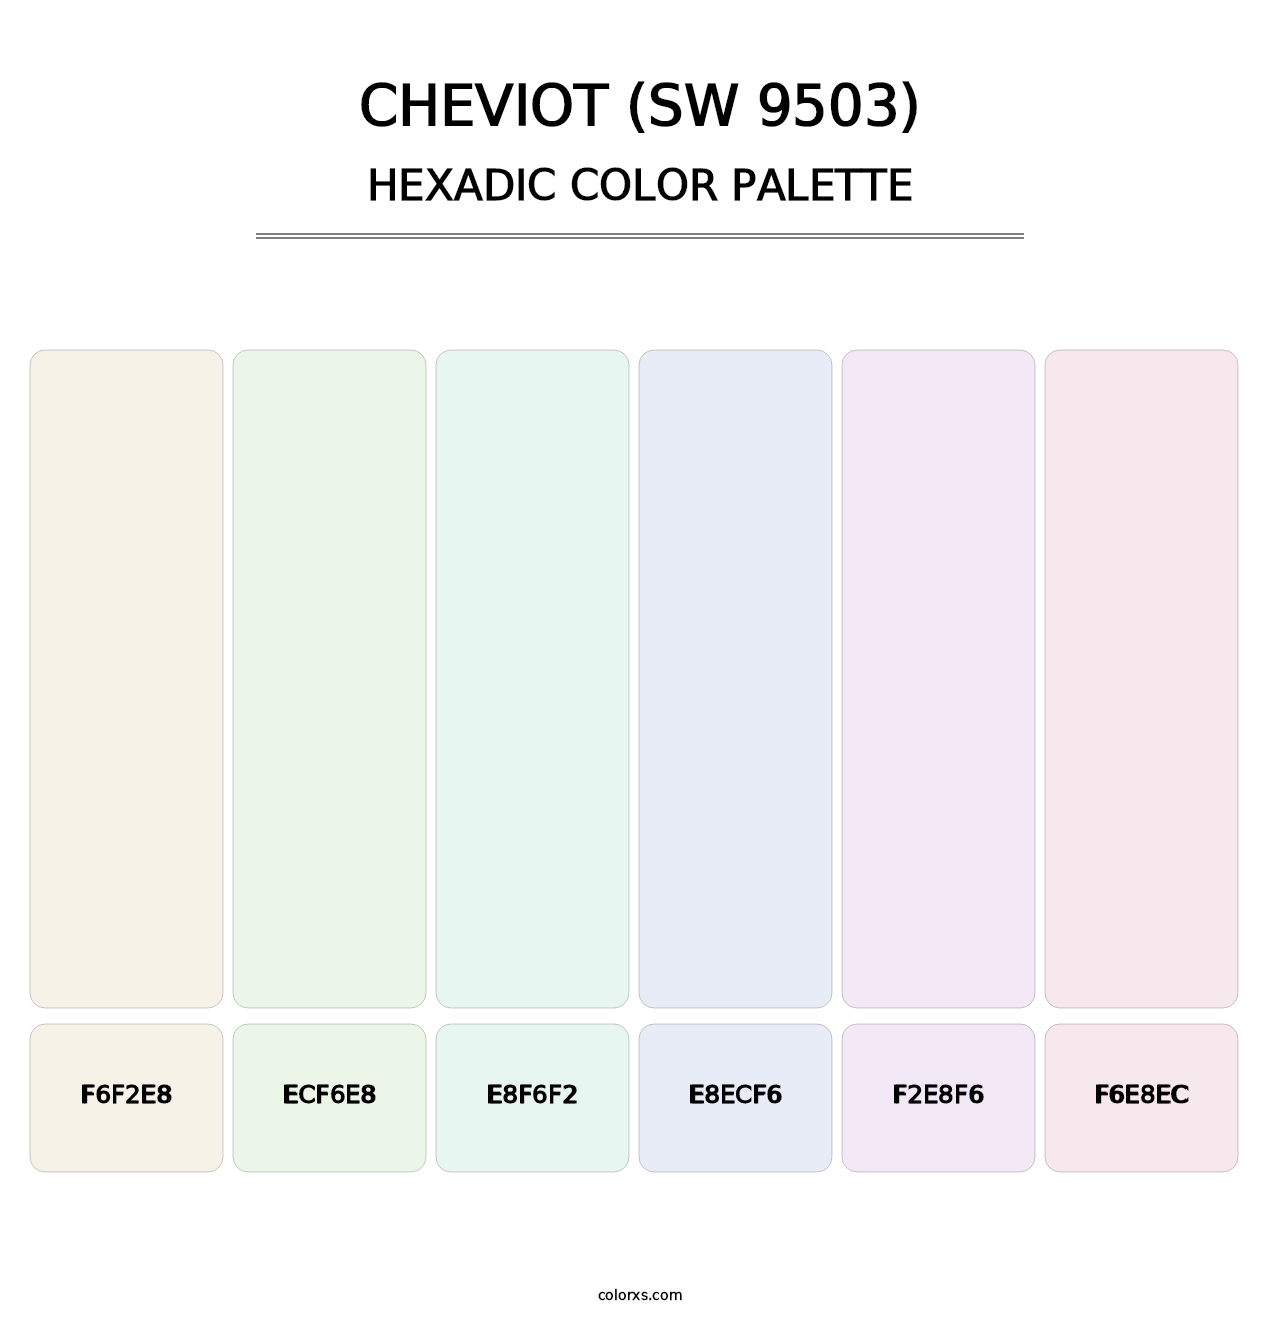 Cheviot (SW 9503) - Hexadic Color Palette